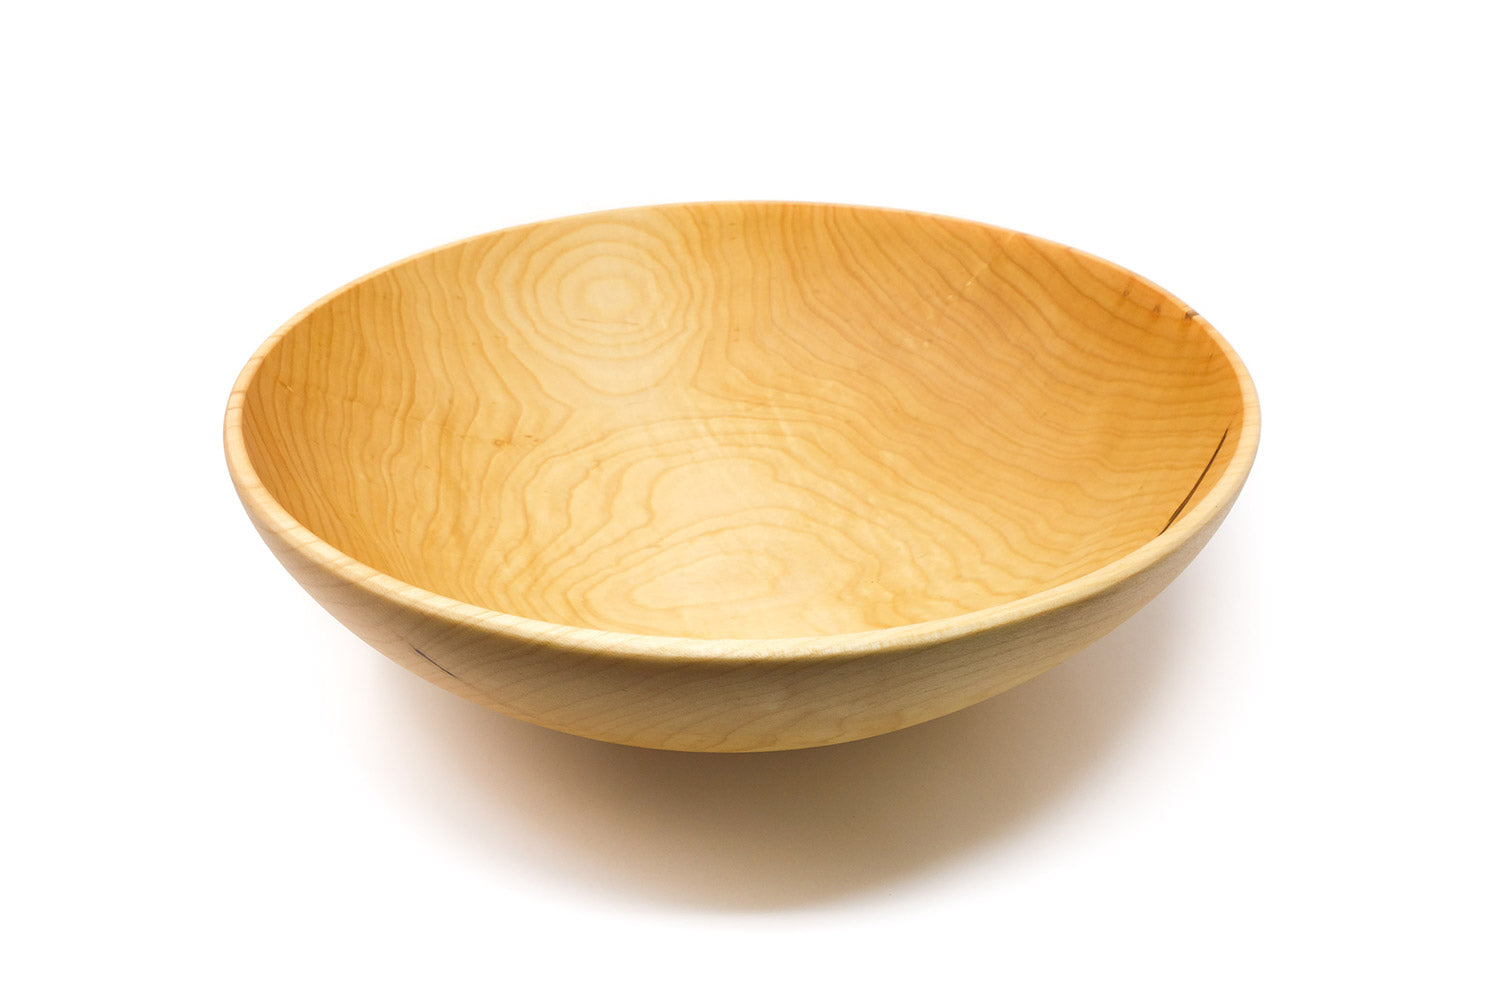 wooden fruit bowl on white background